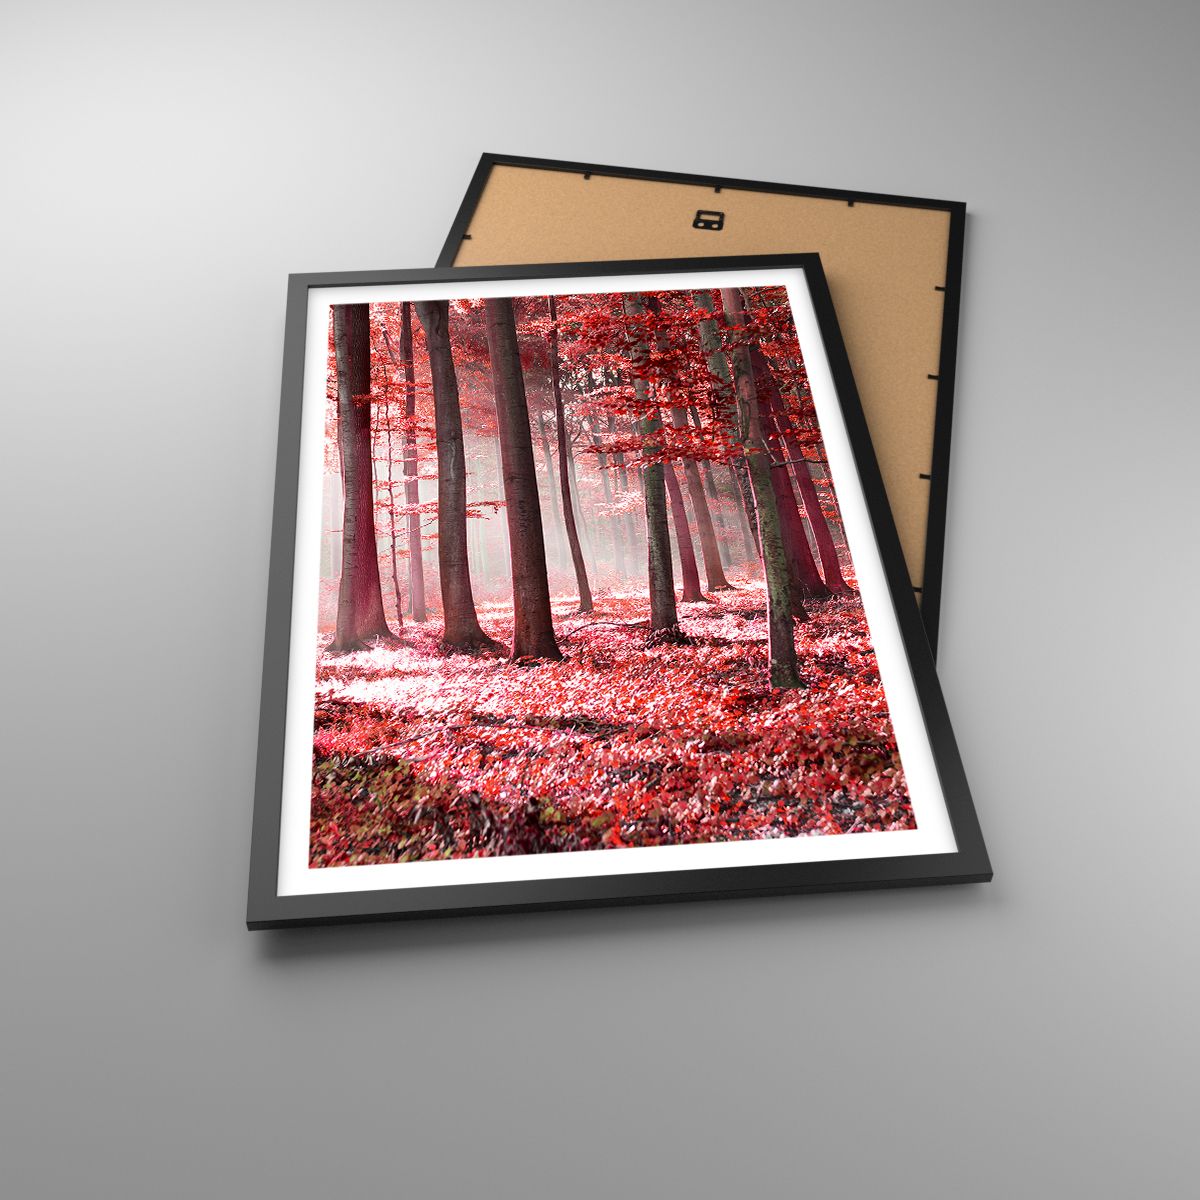 Poster Landschaft, Poster Wald, Poster Bäume, Poster Natur, Poster Rote Blätter